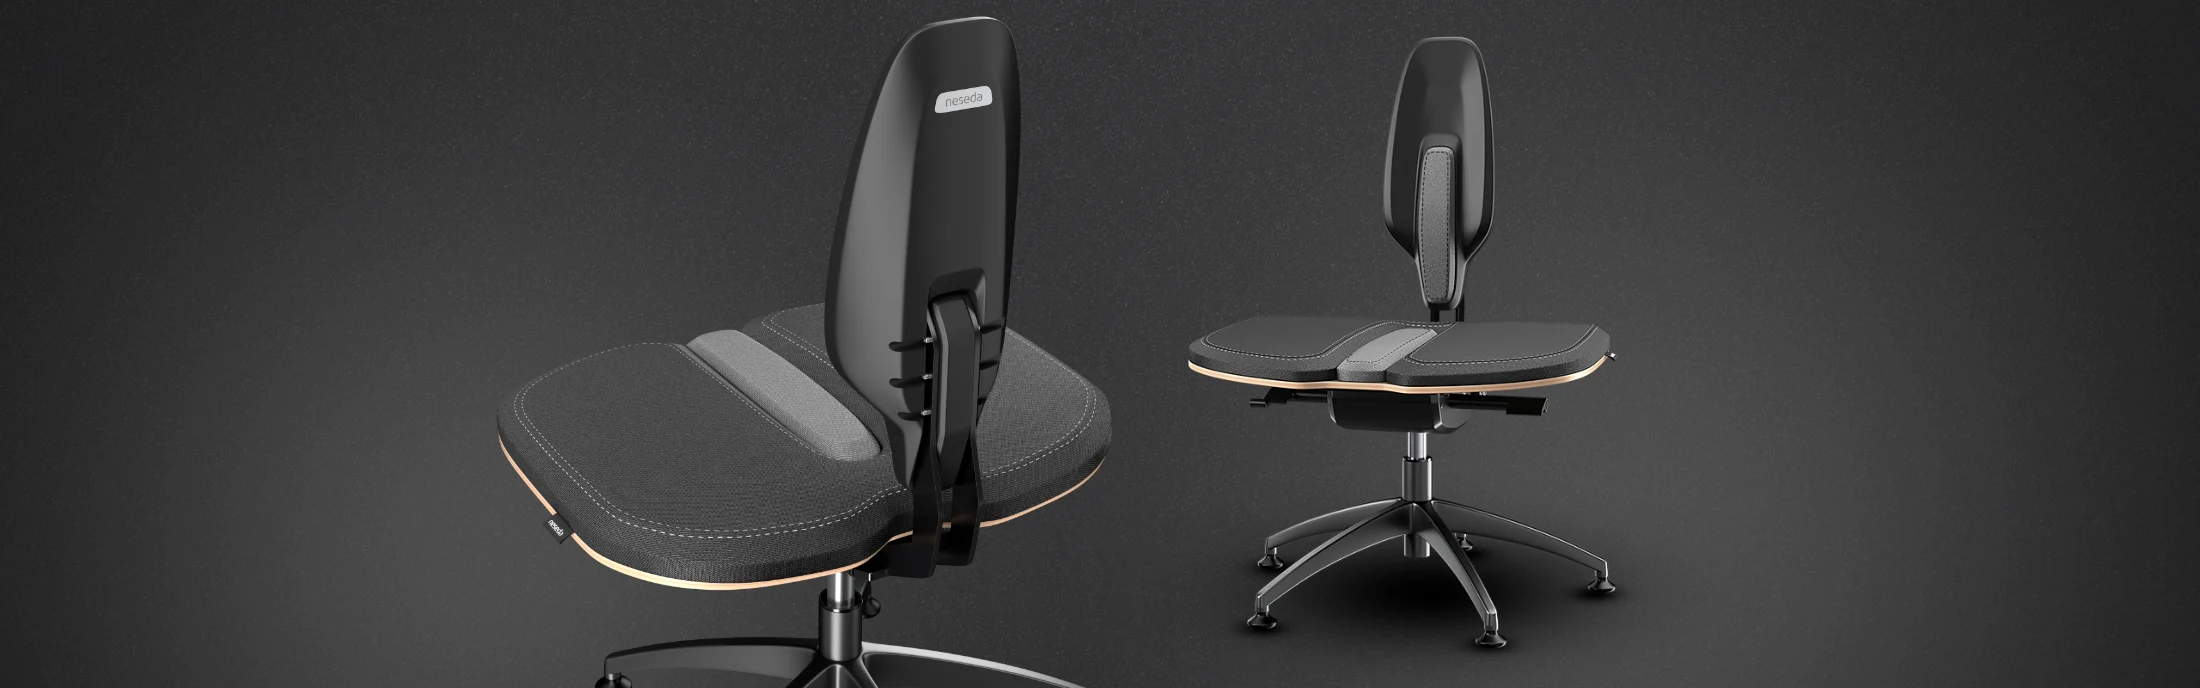 NESEDA Advanced Chair Final visualizations_Design b Werkemotion